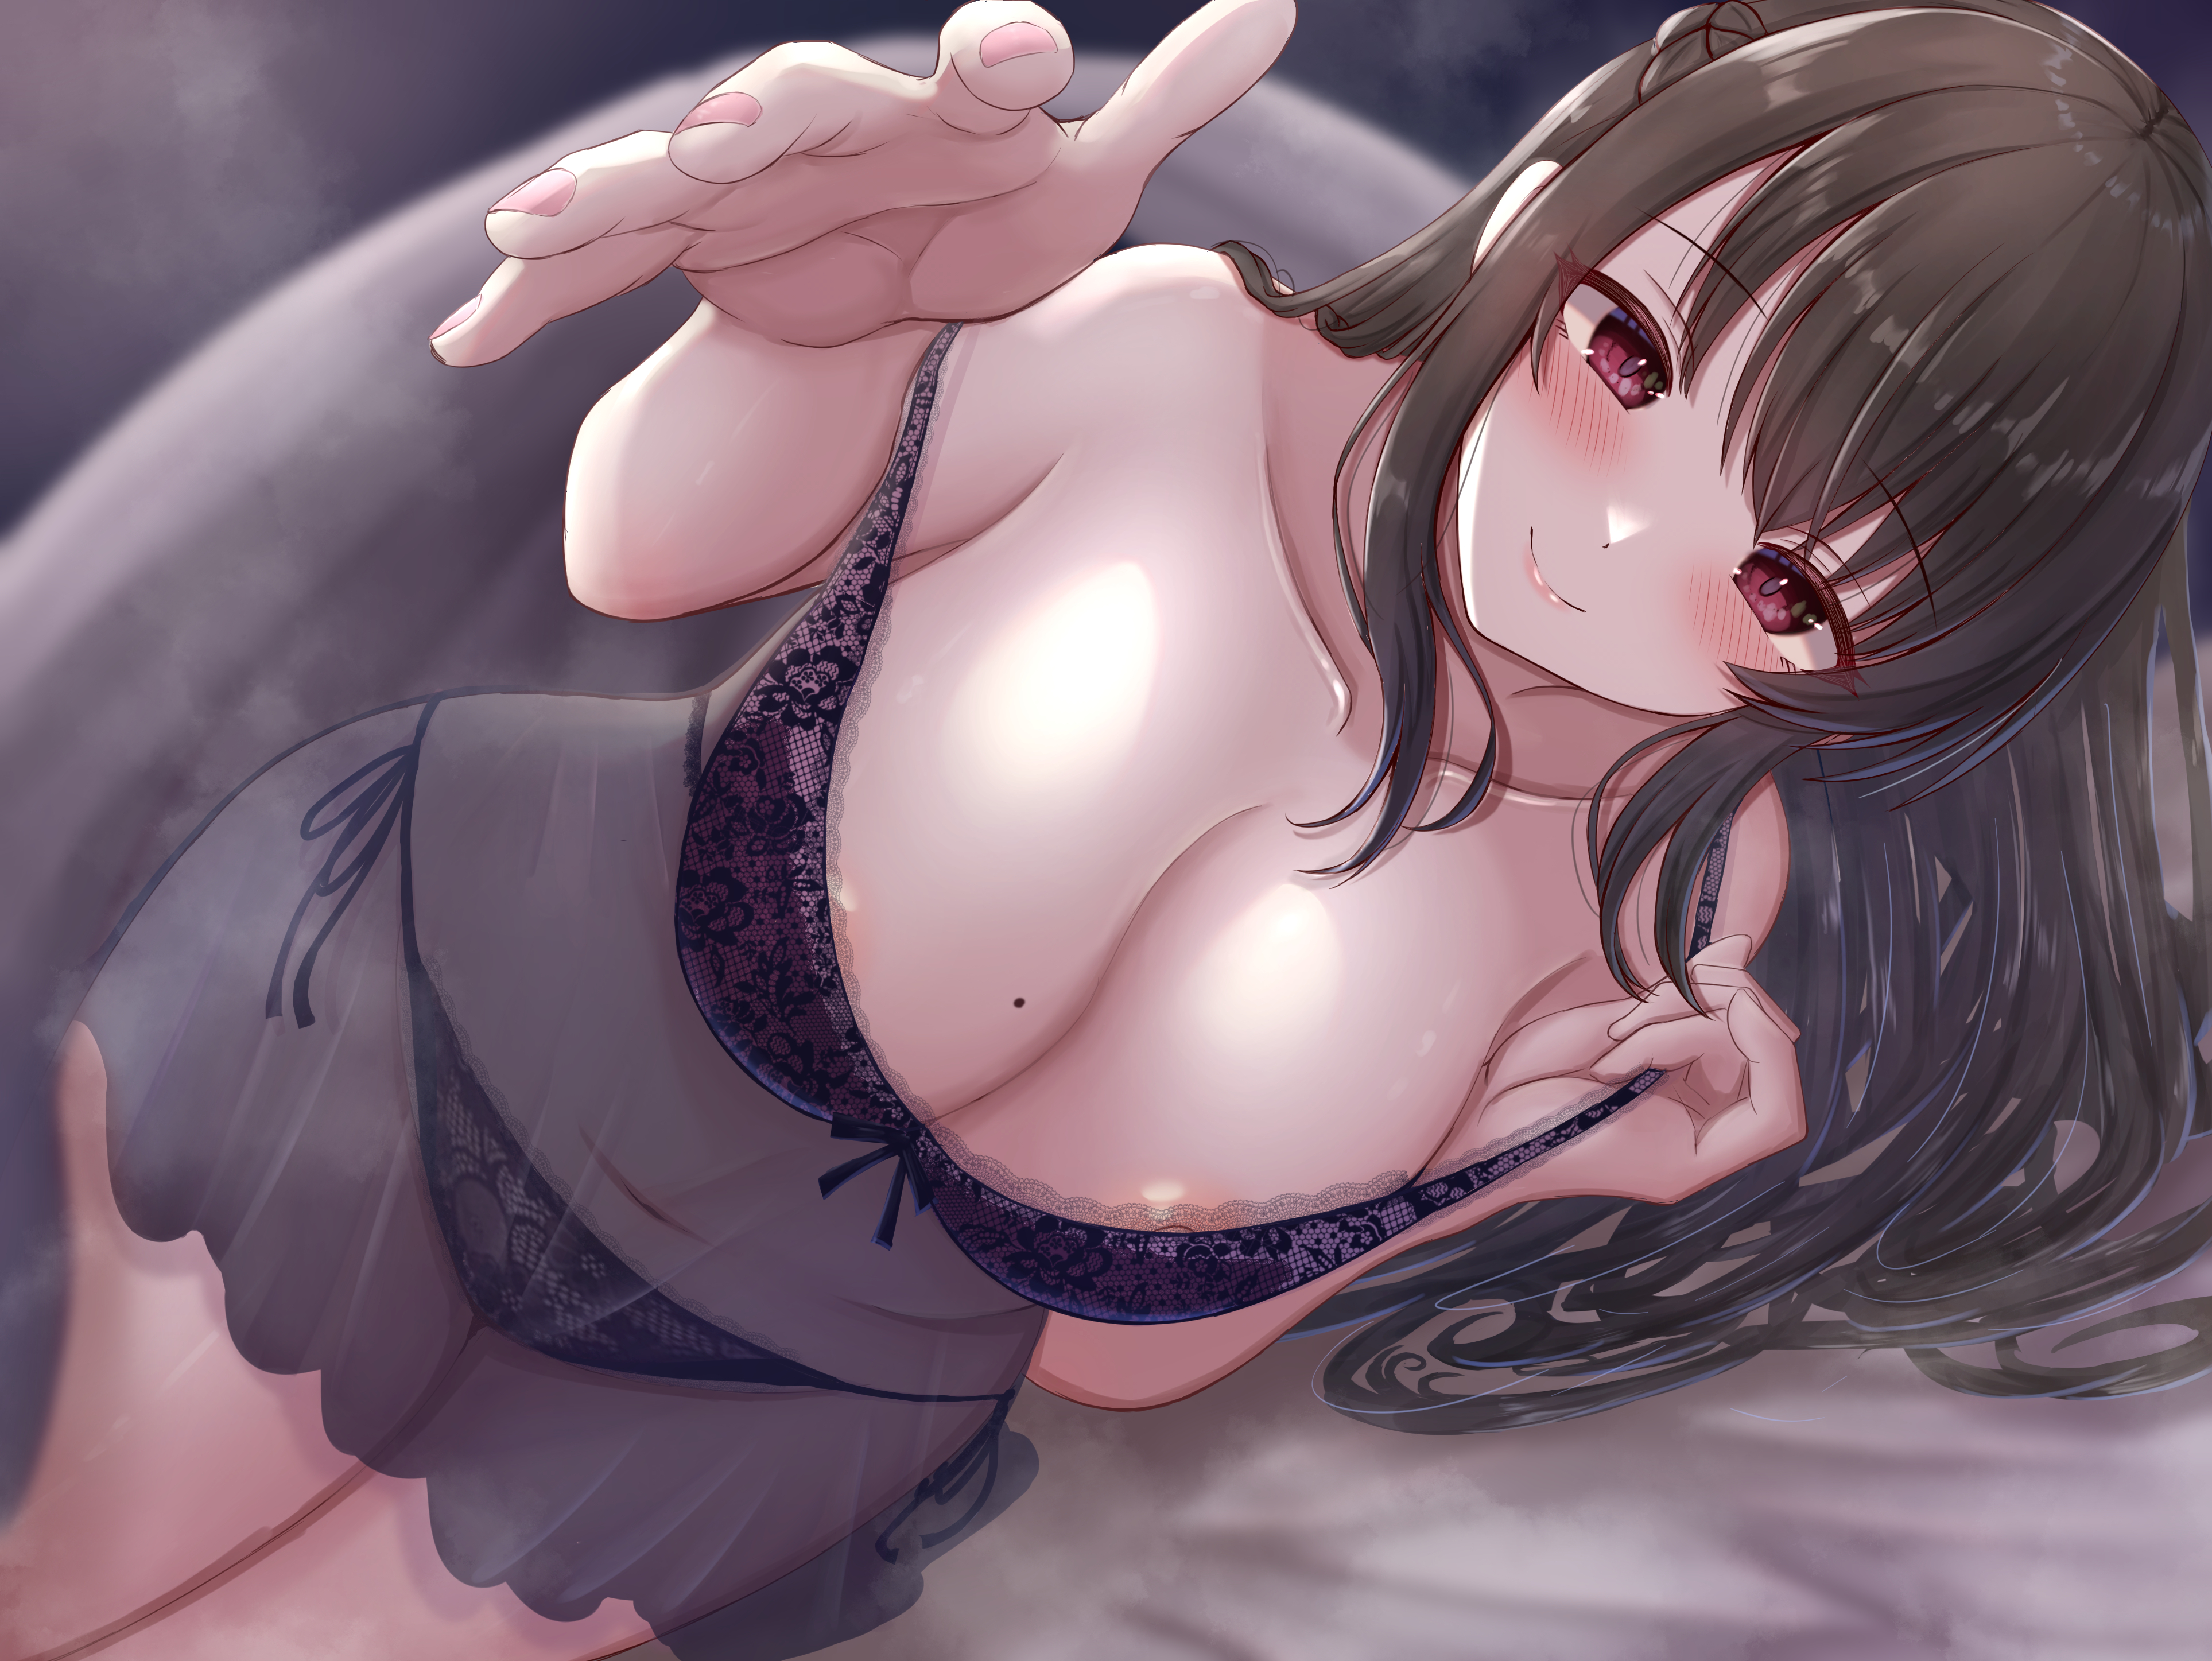 Anime 3854x2894 anime anime girls big boobs underwear cleavage lingerie dark hair smiling artwork Nohhun